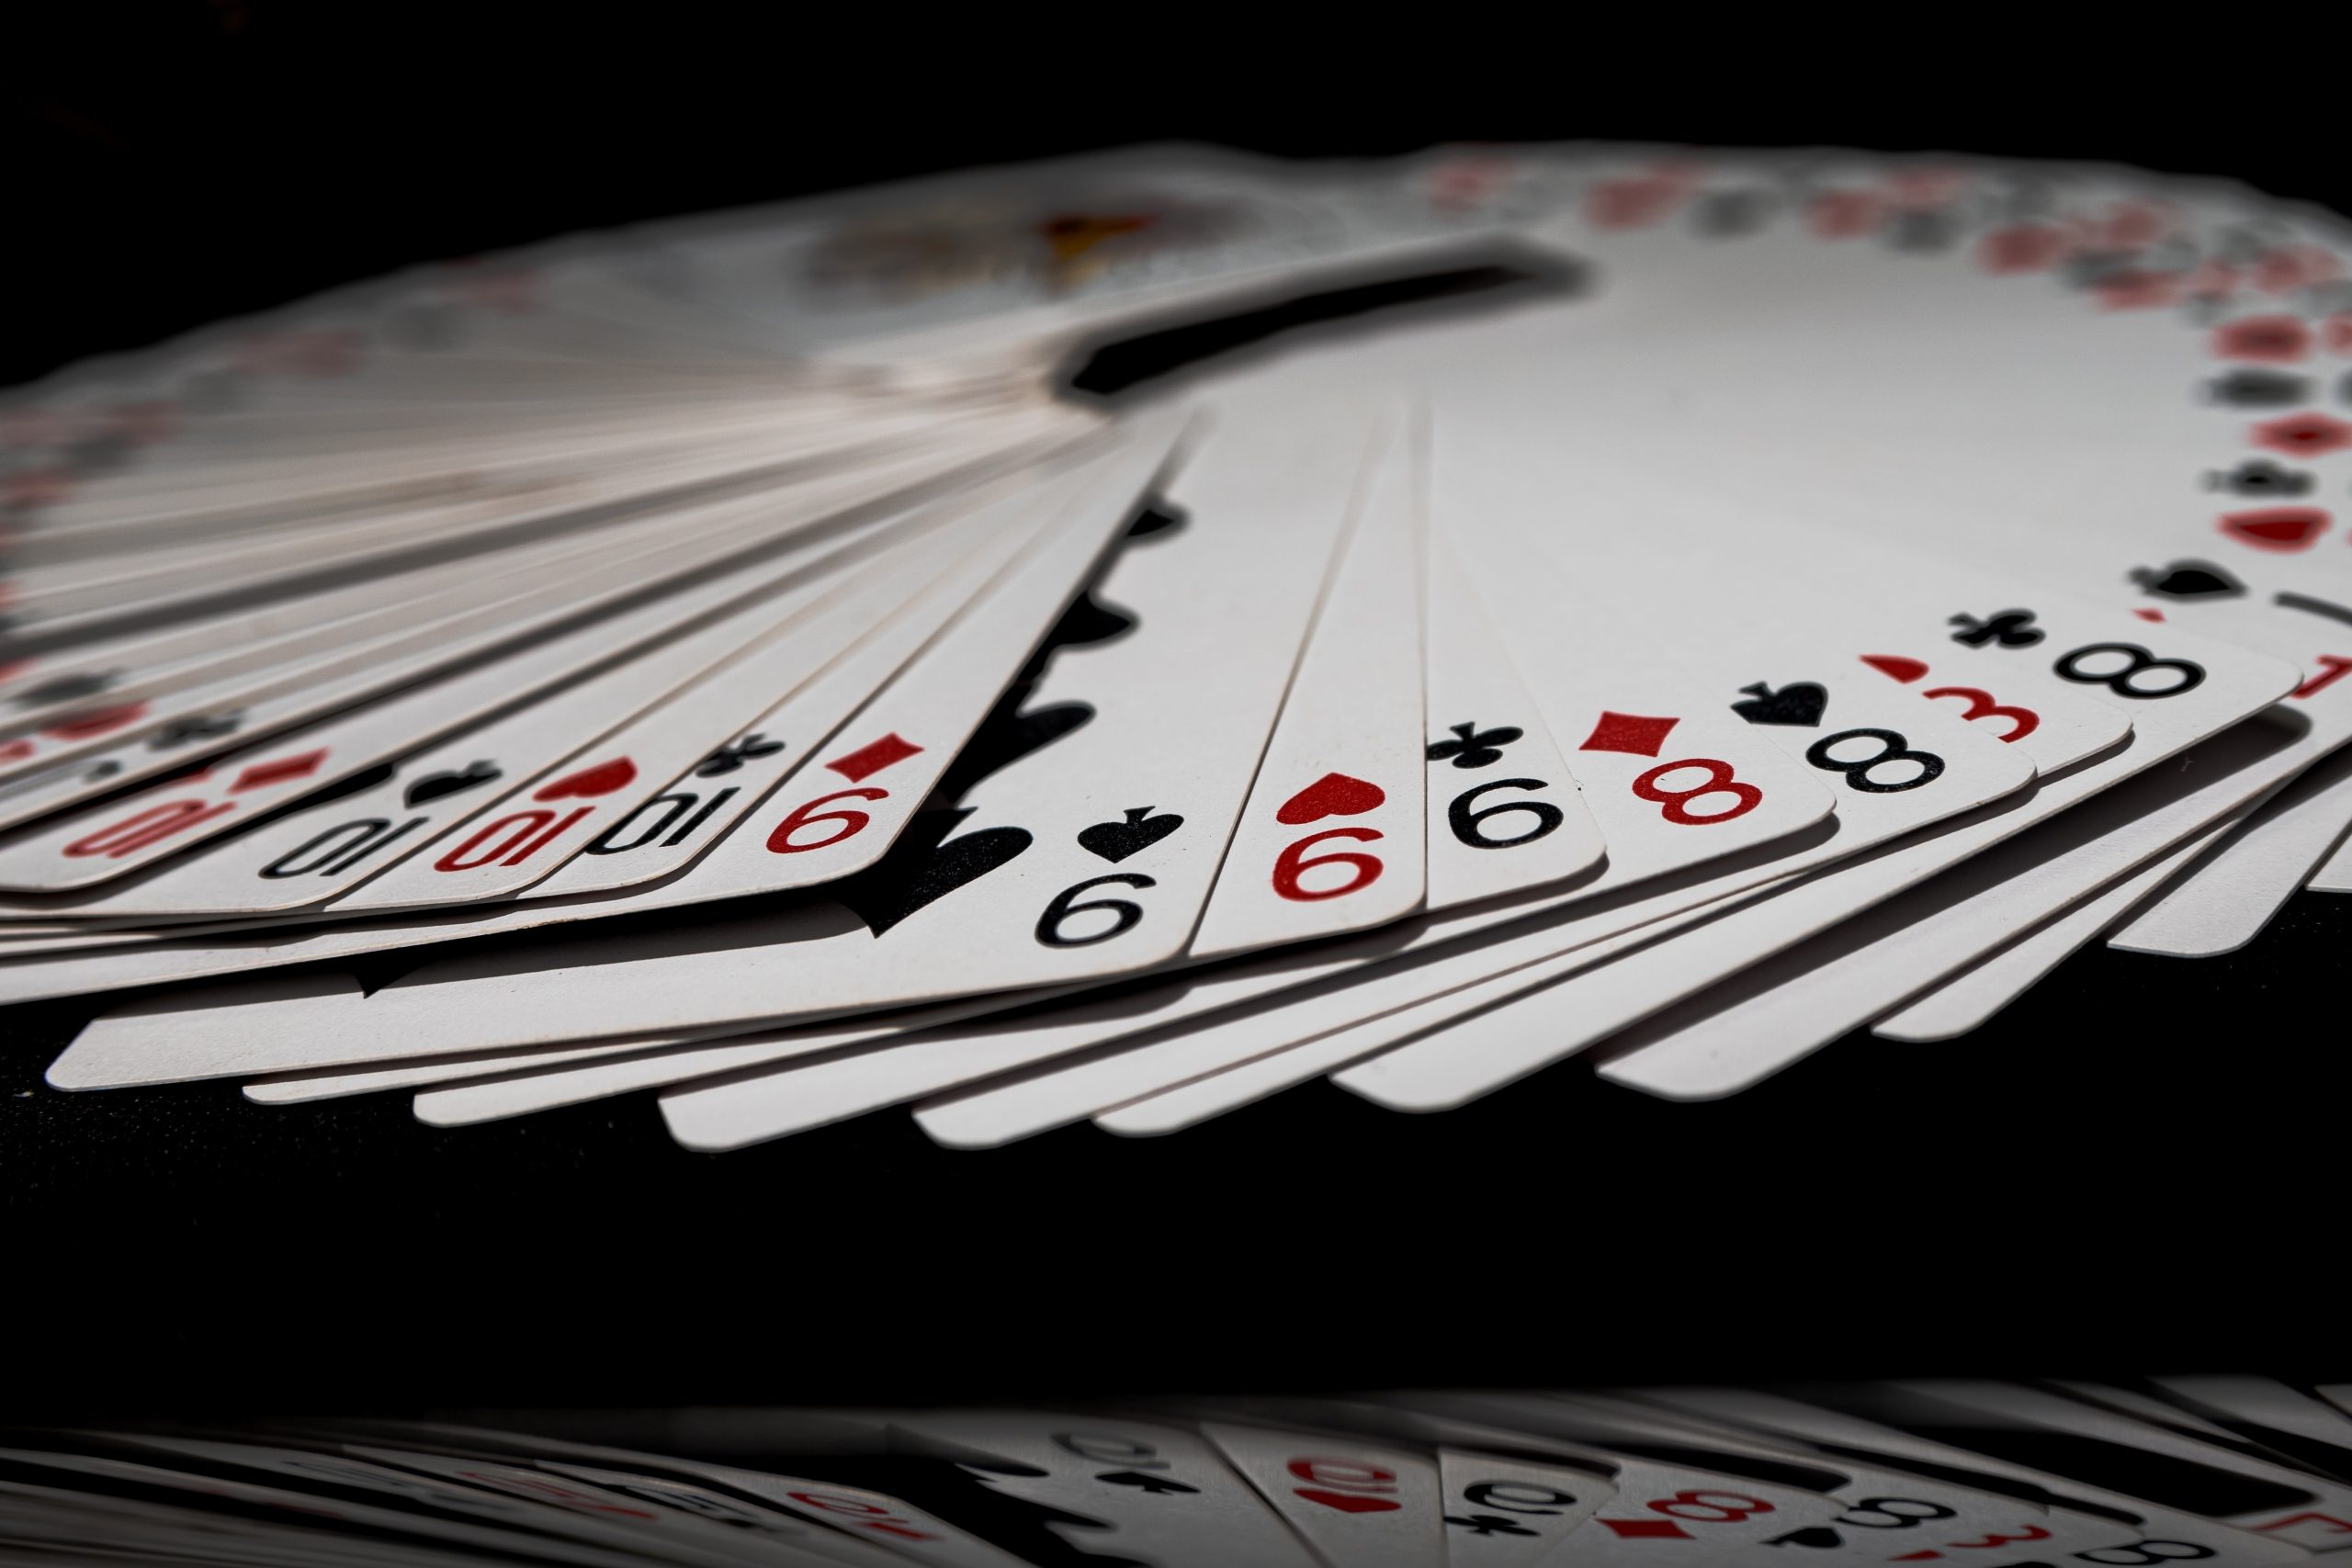 JP Morgan predicts casinos will generate 17 billion patacas in revenue this month